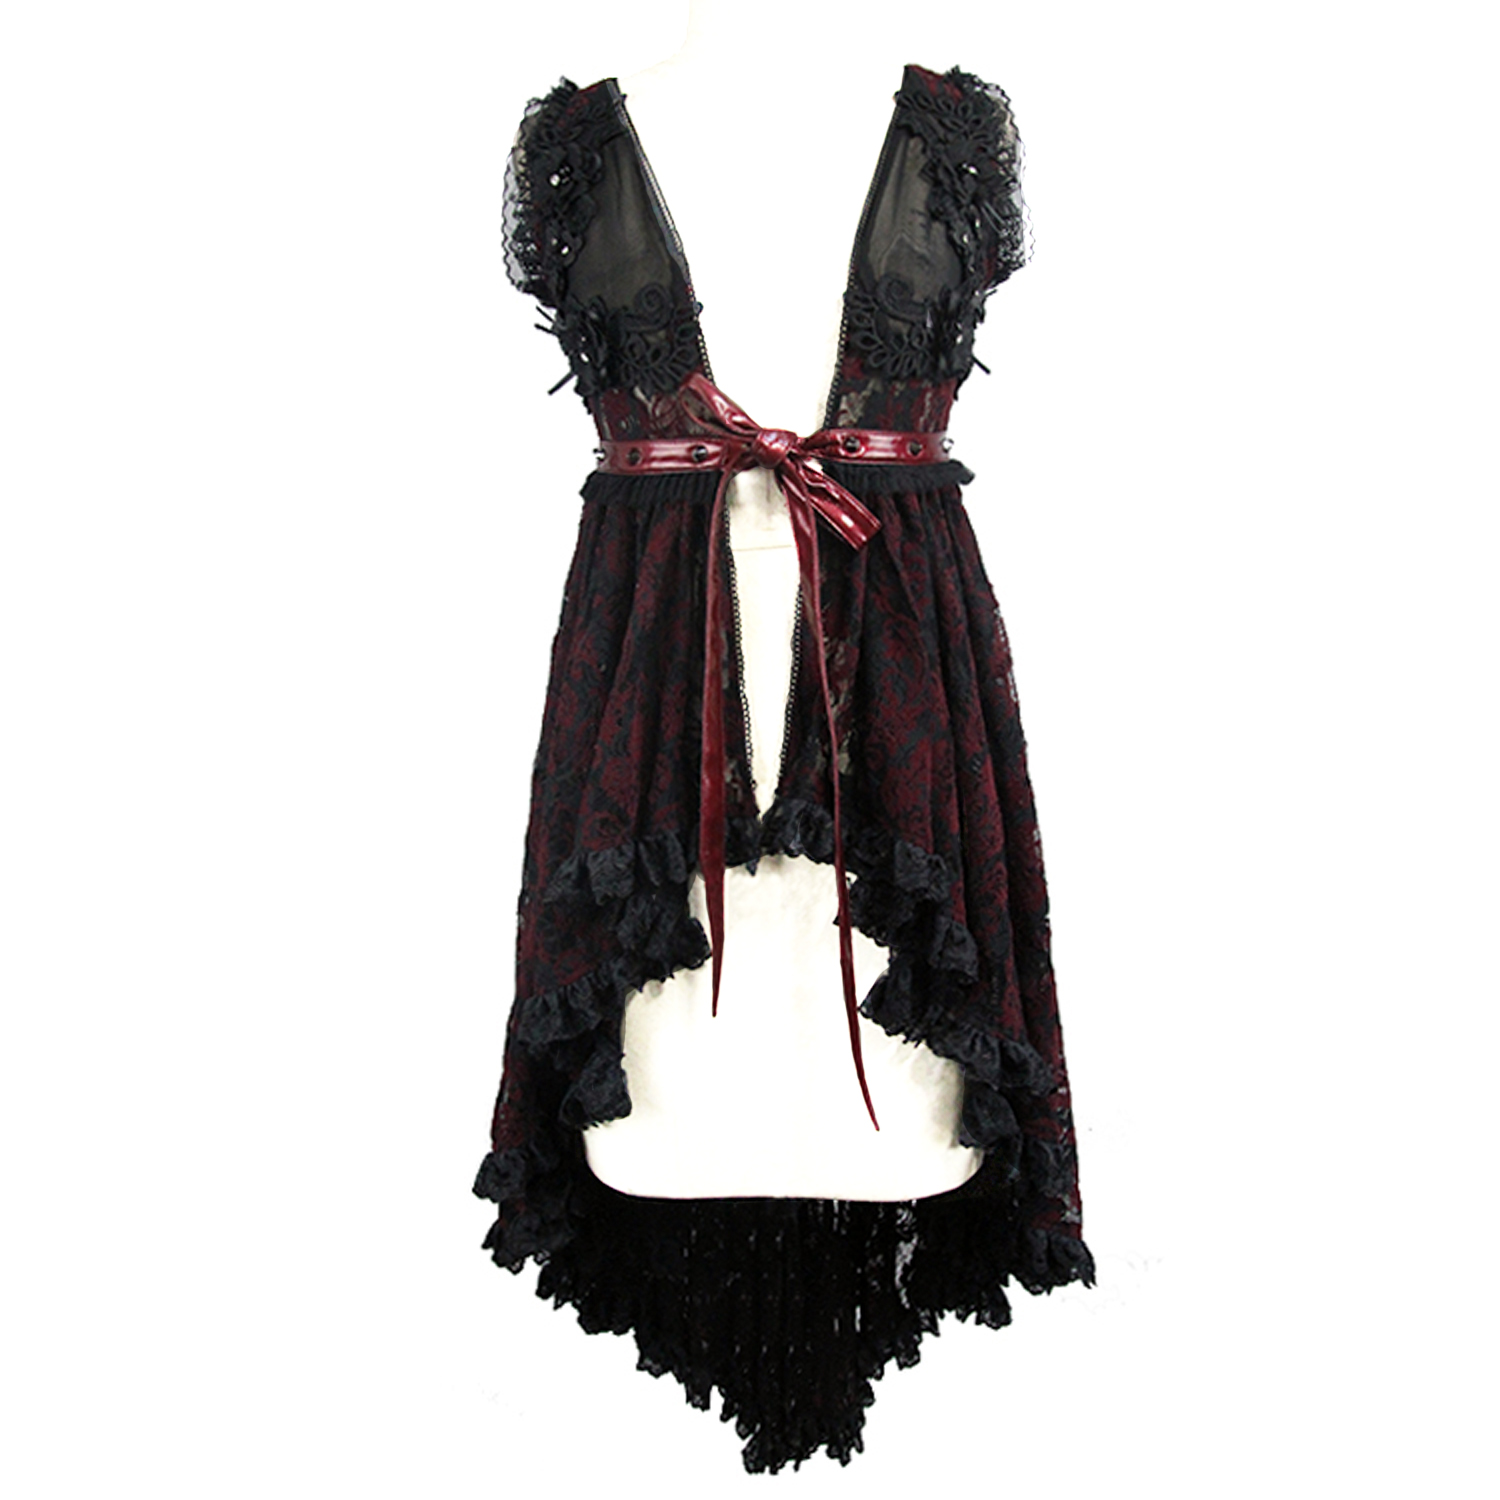 https://www.thedarkstore.com/19404/black-and-red-lace-romantic-goth-night-dress.jpg